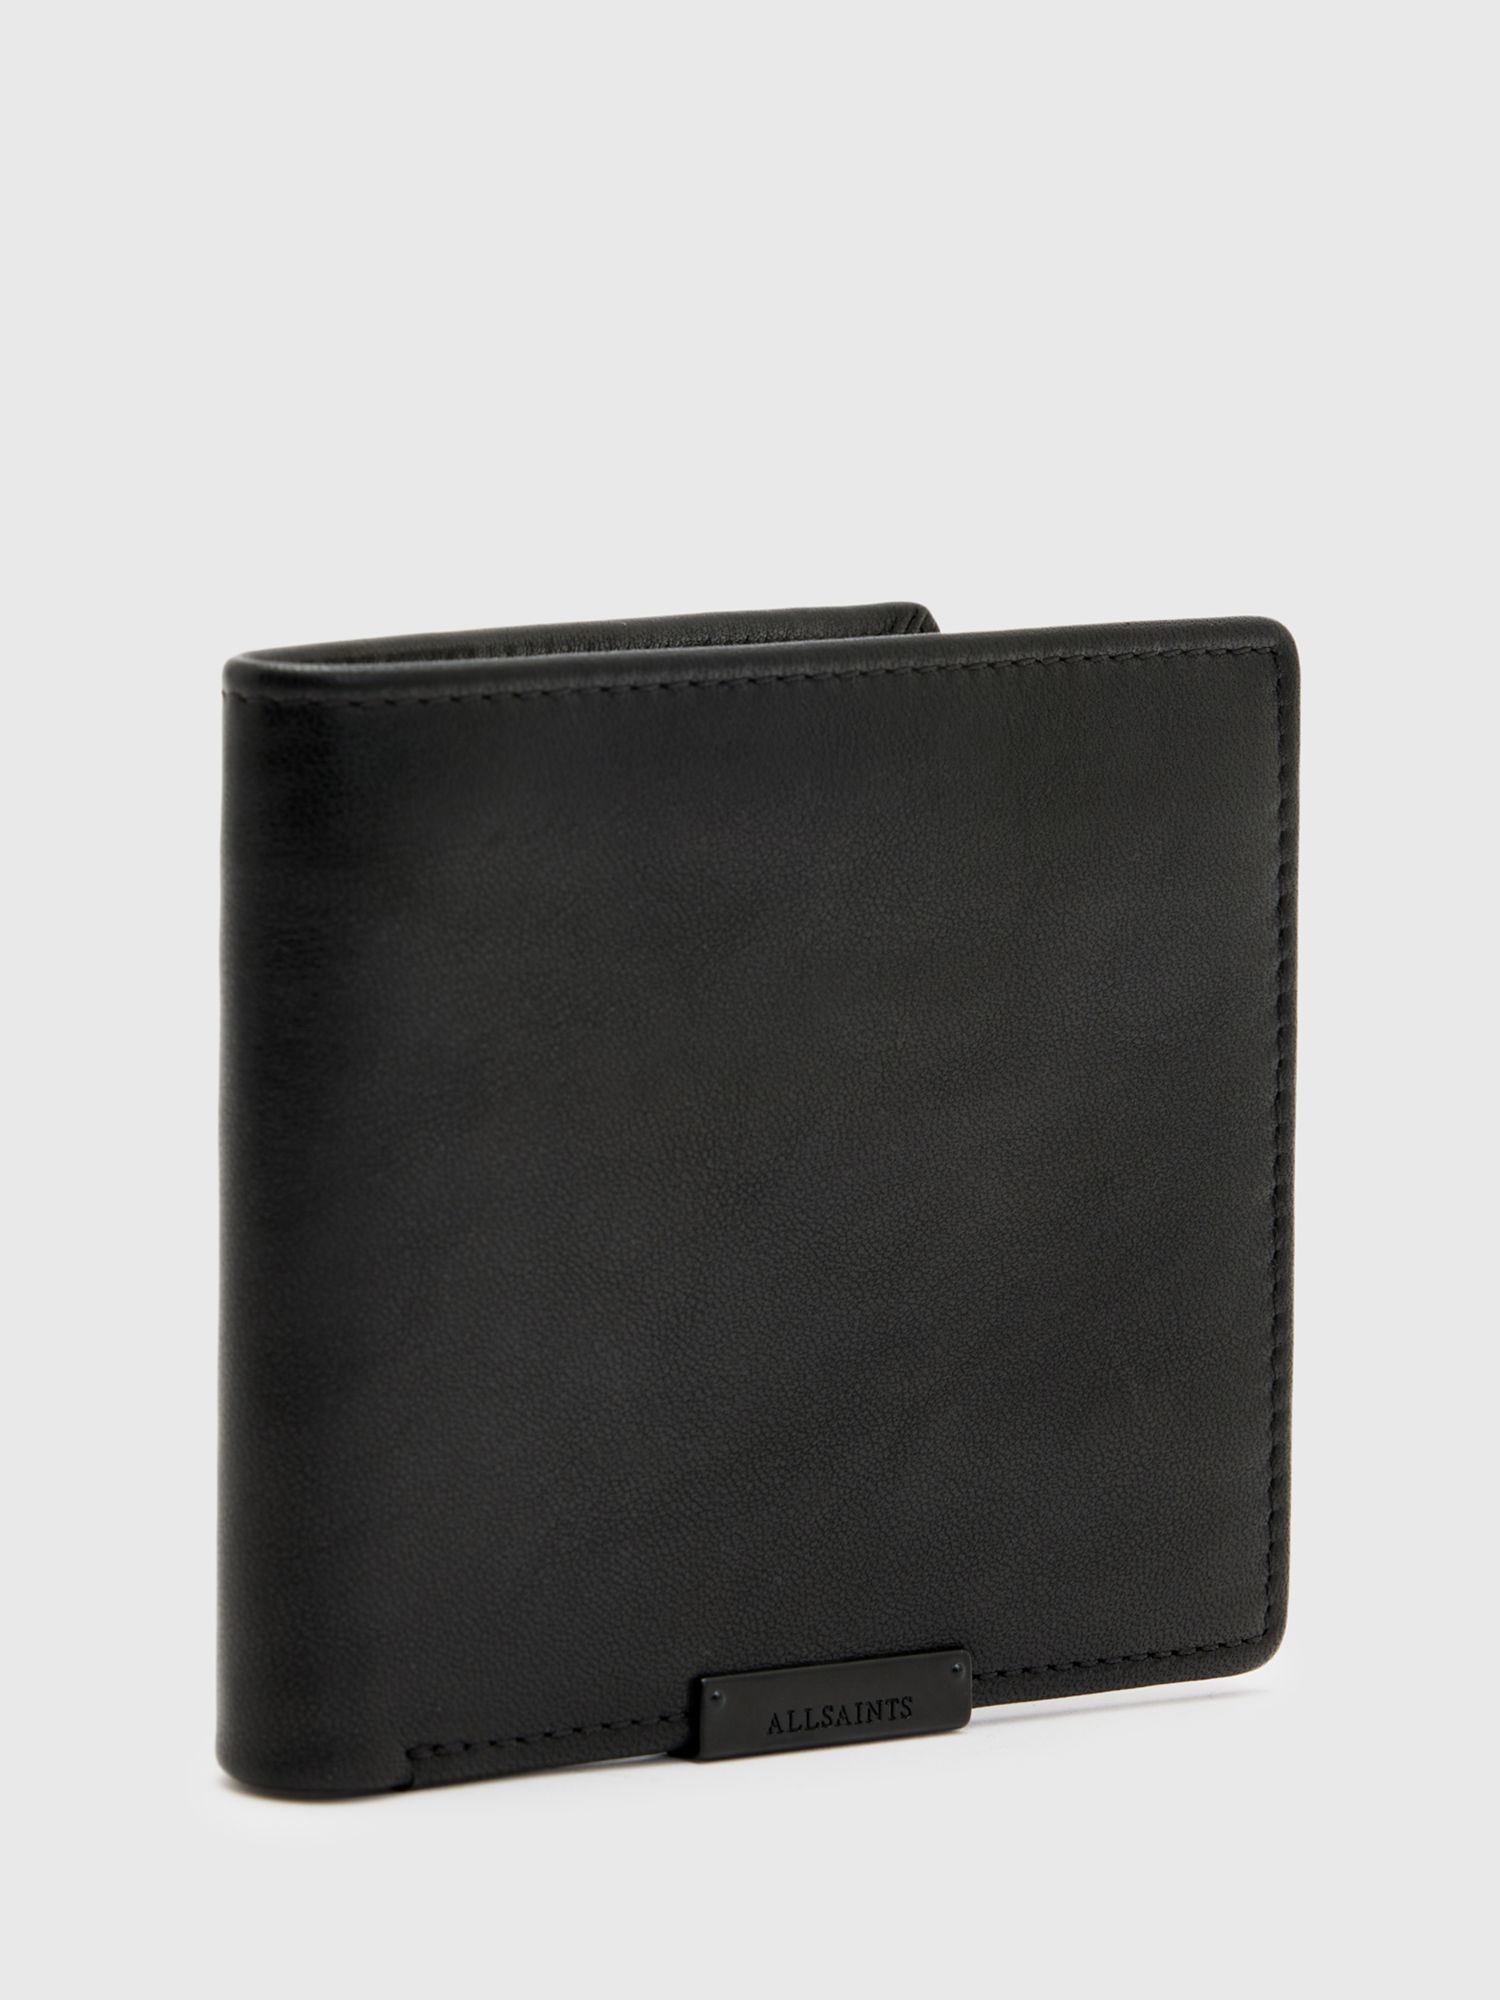 AllSaints Attain Cardholder Wallet, Black, One Size